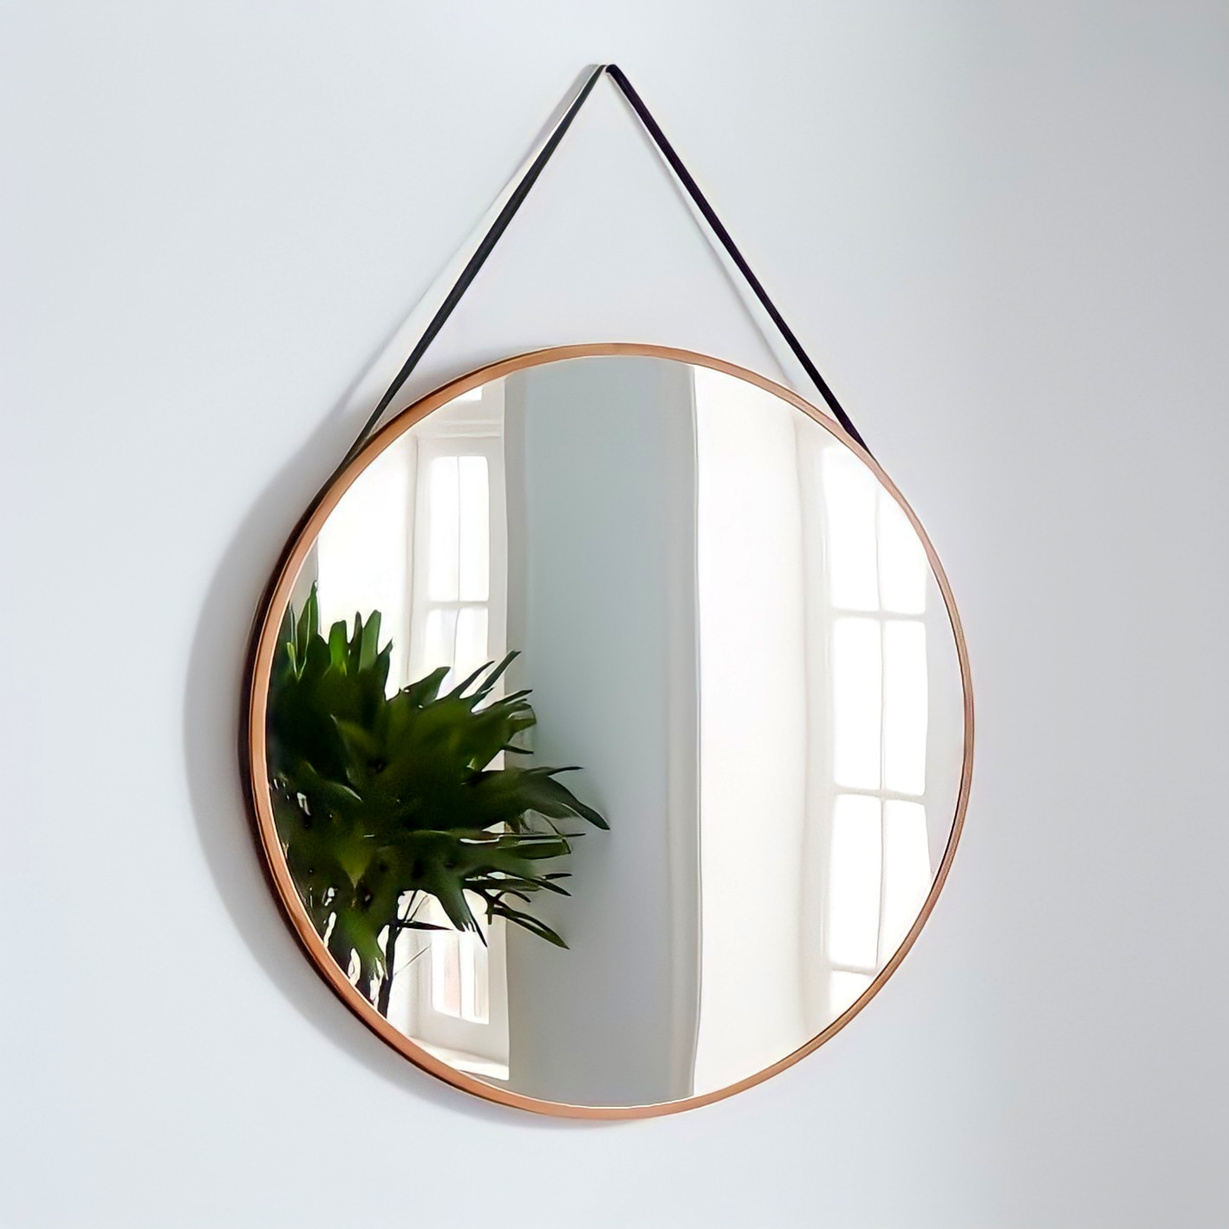 Mirror at minimalis modern house